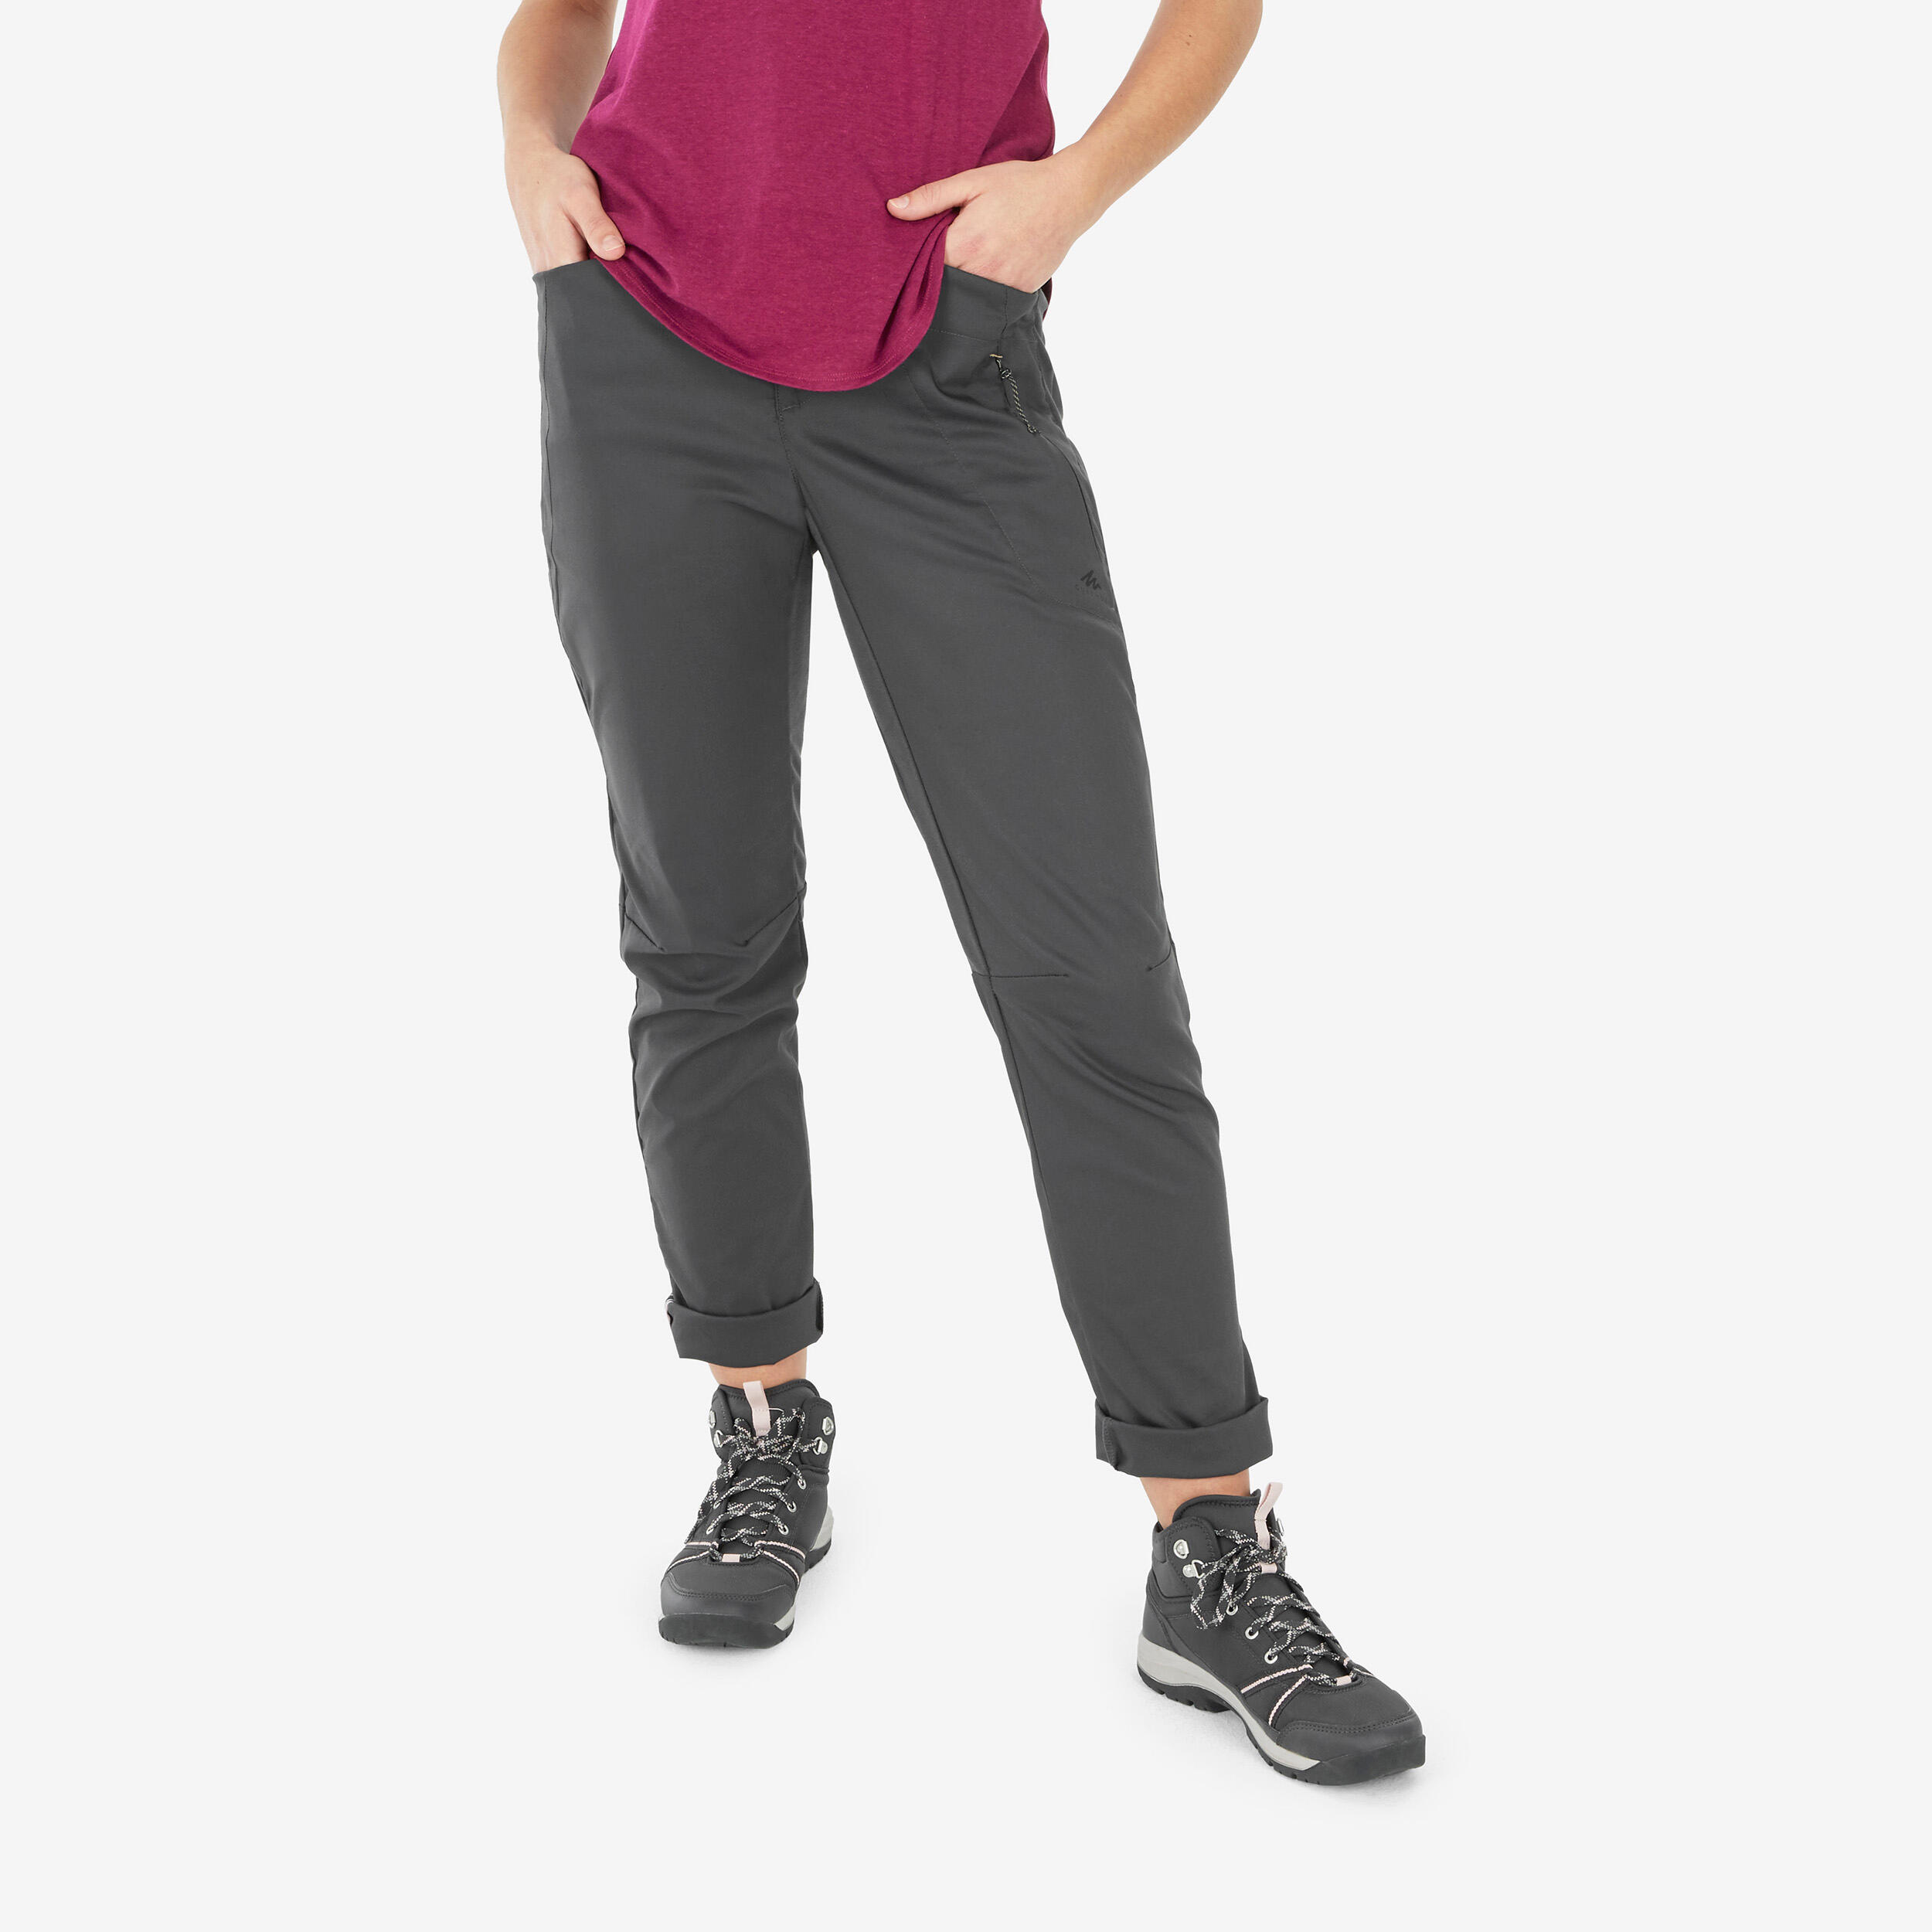 Women's Hiking Pants - MT 500 Grey - Carbon grey, Black, Carbon